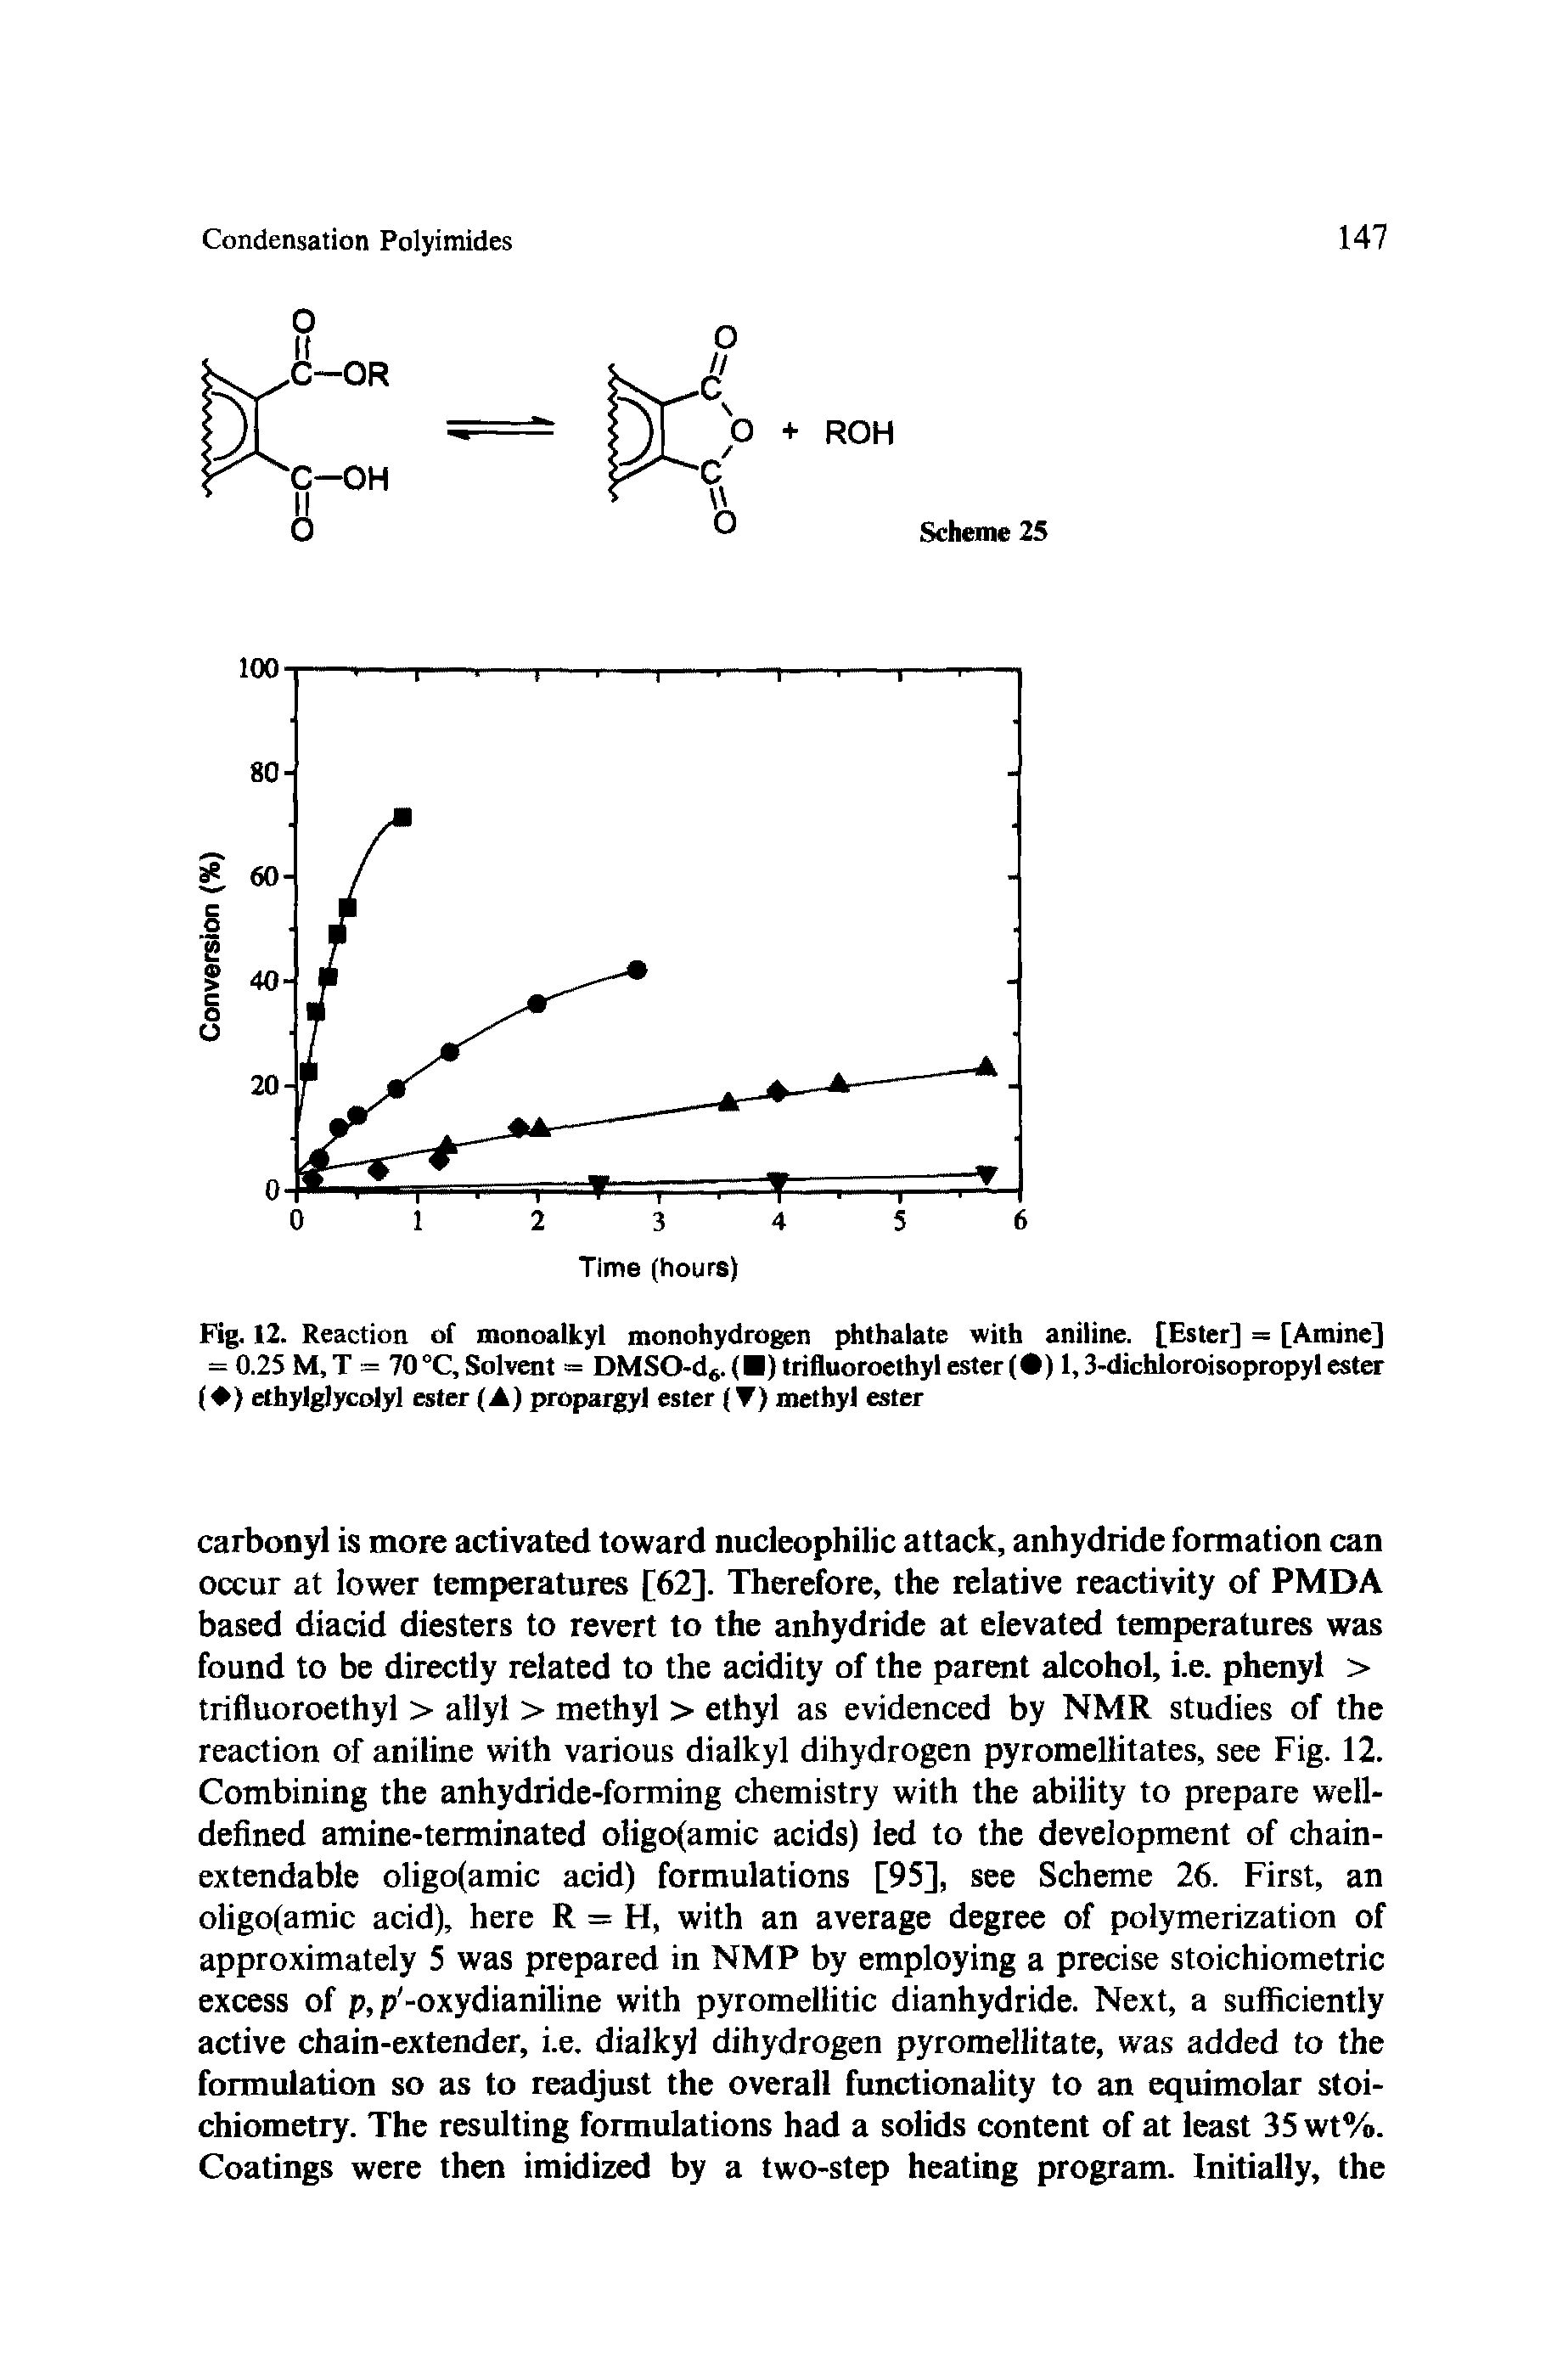 Fig. 12. Reaction of monoalkyl monohydrogen phthalate with aniline. [Ester] = [Amine] = 0.25 M, T = 70 °C, Solvent = DMSO-d6. ( ) trifluoroethyl ester ( ) 1,3-dichloroisopropyl ester ( ) ethylglycolyl ester (A) propargyl ester (T) methyl ester...